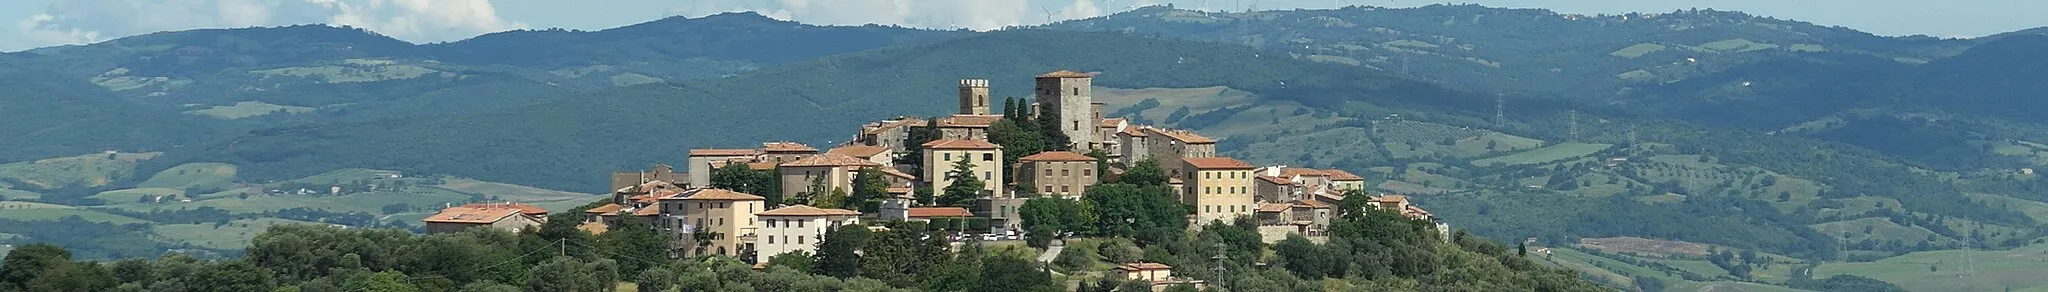 Photo showing: Montmerano, Manciano, Grosseto, Italy